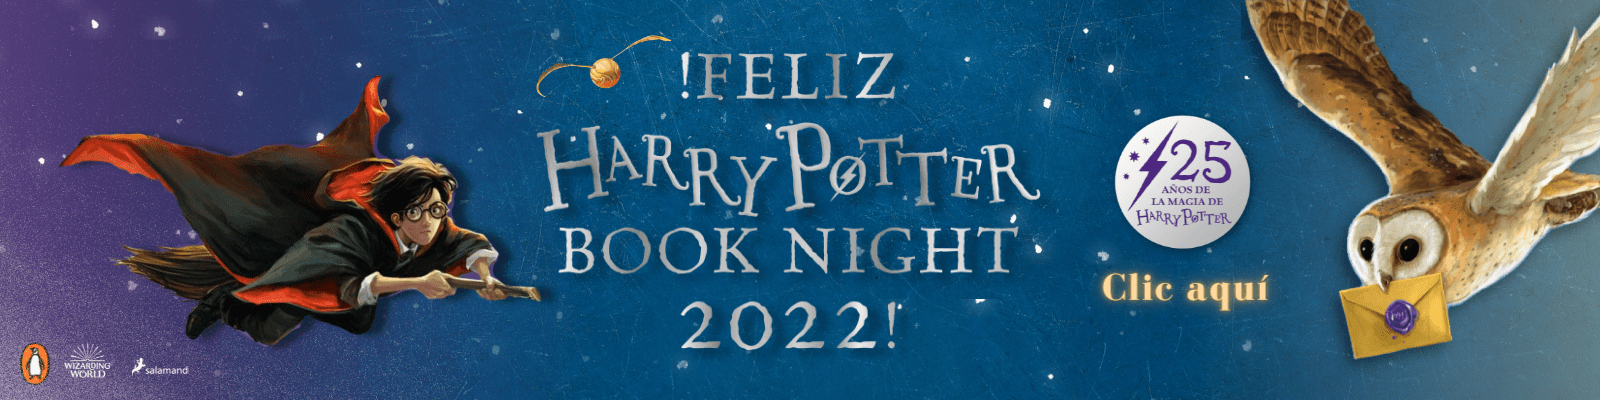 Feliz Harry Potter Book Night 2022 - Desktop